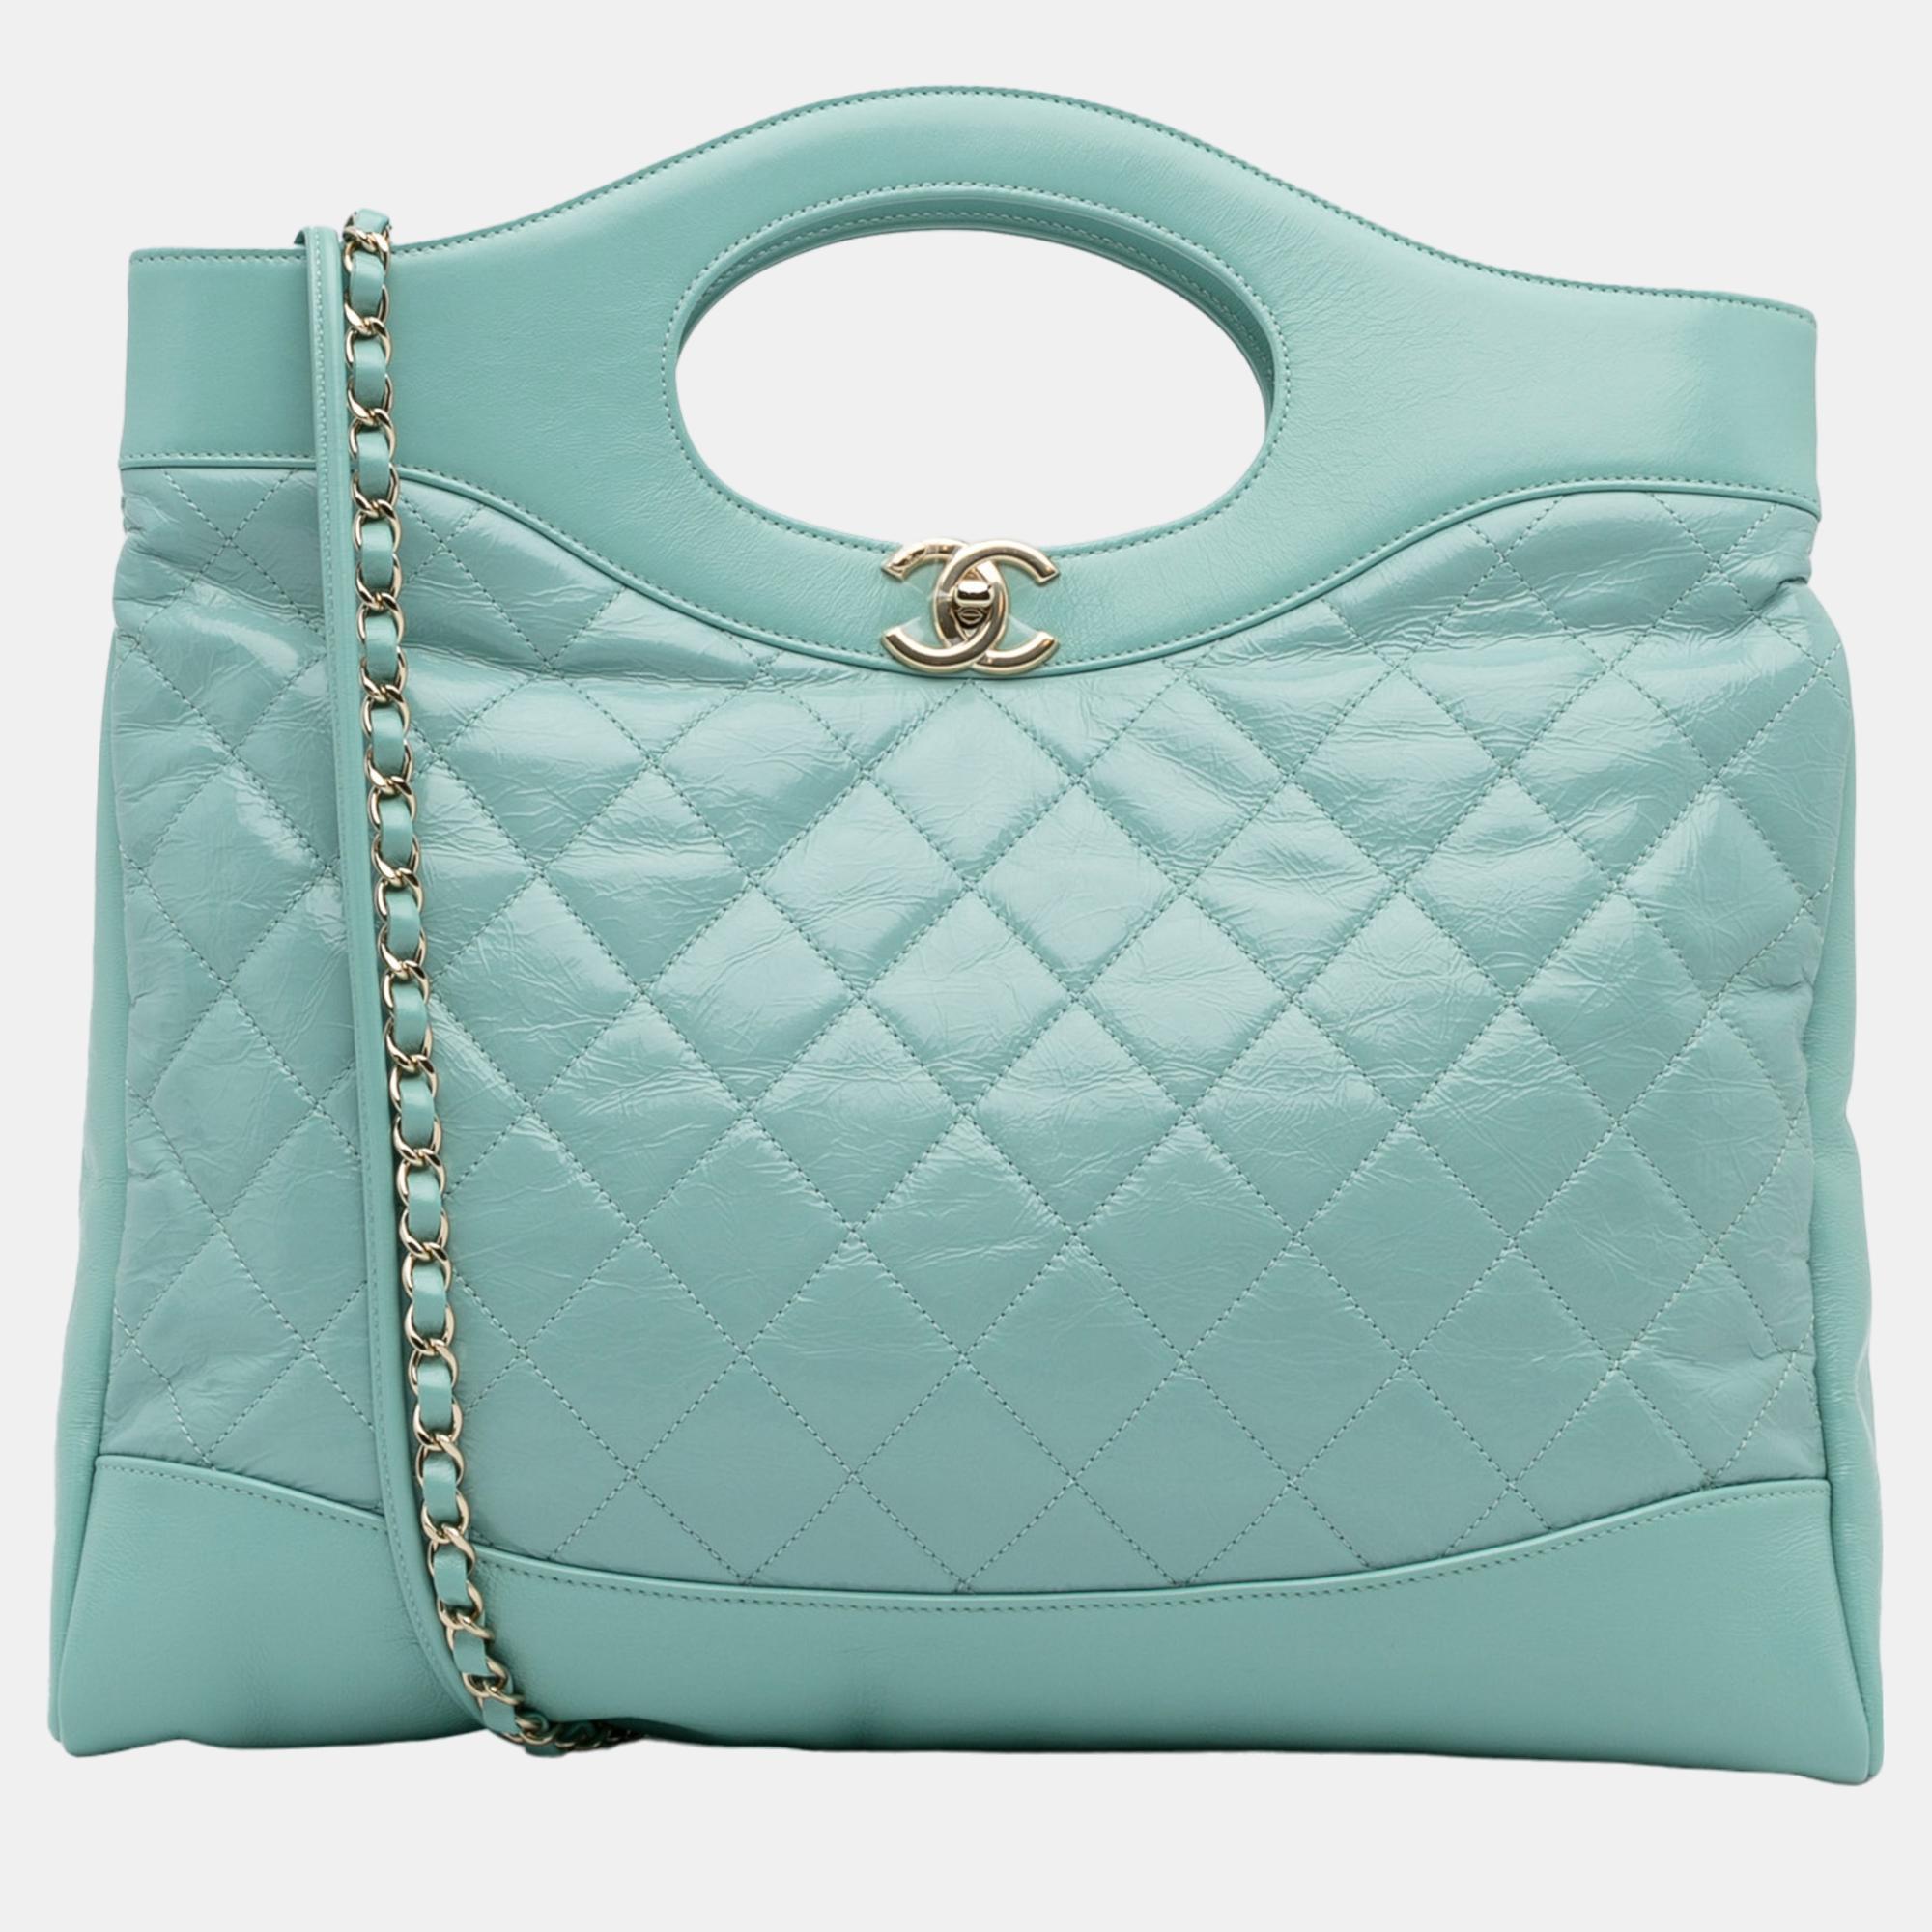 Chanel blue large 31 satchel